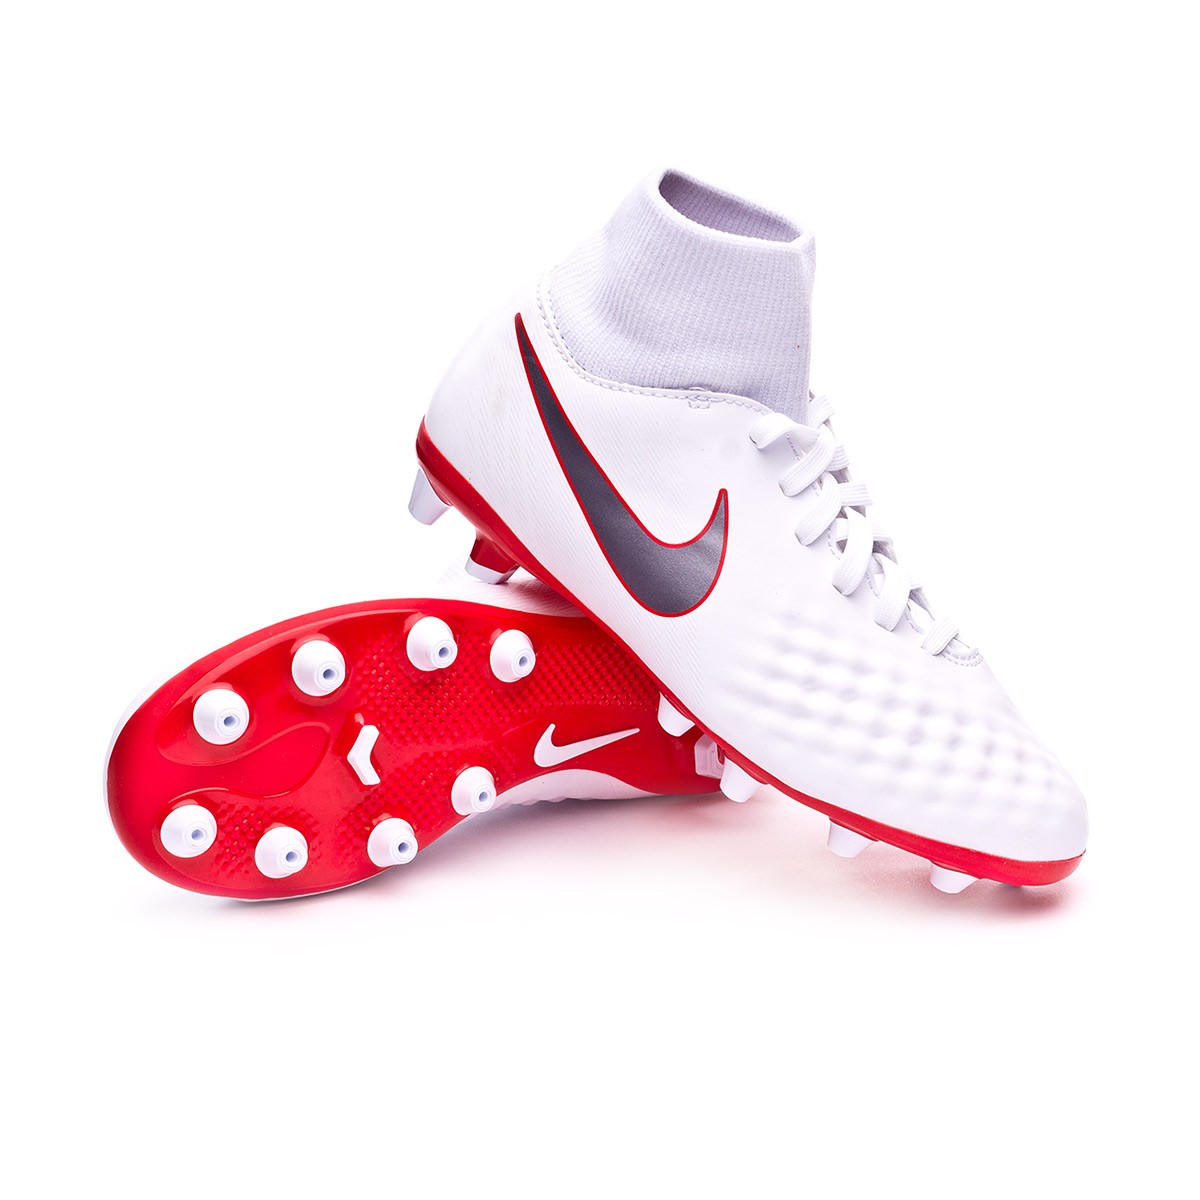 Nike Hypervenom Phantom Football Boots for sale eBay